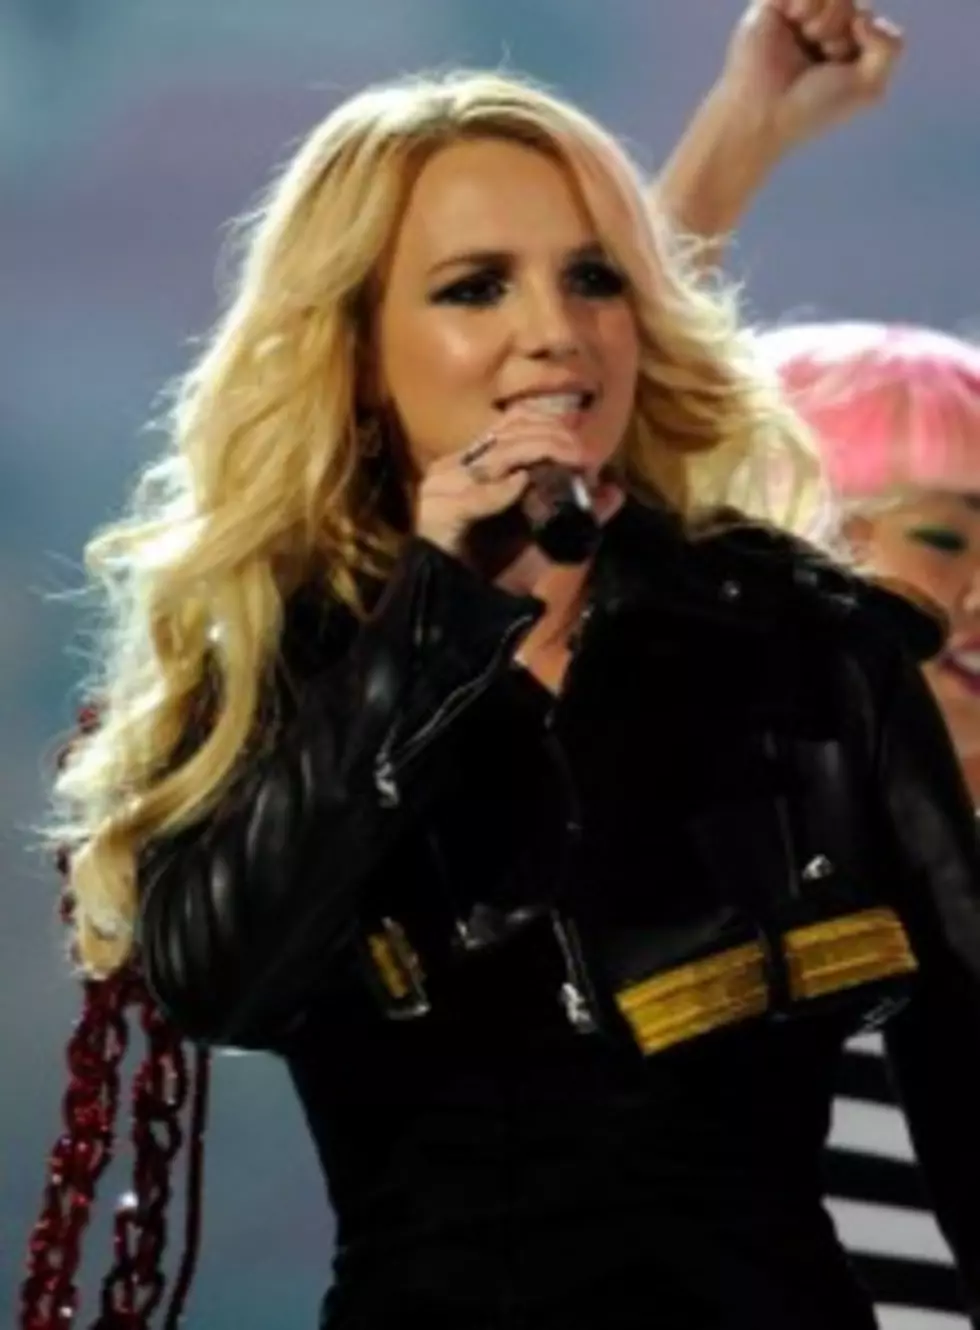 Britney Spears Kicks-Off “Femme Fatale” World Tour